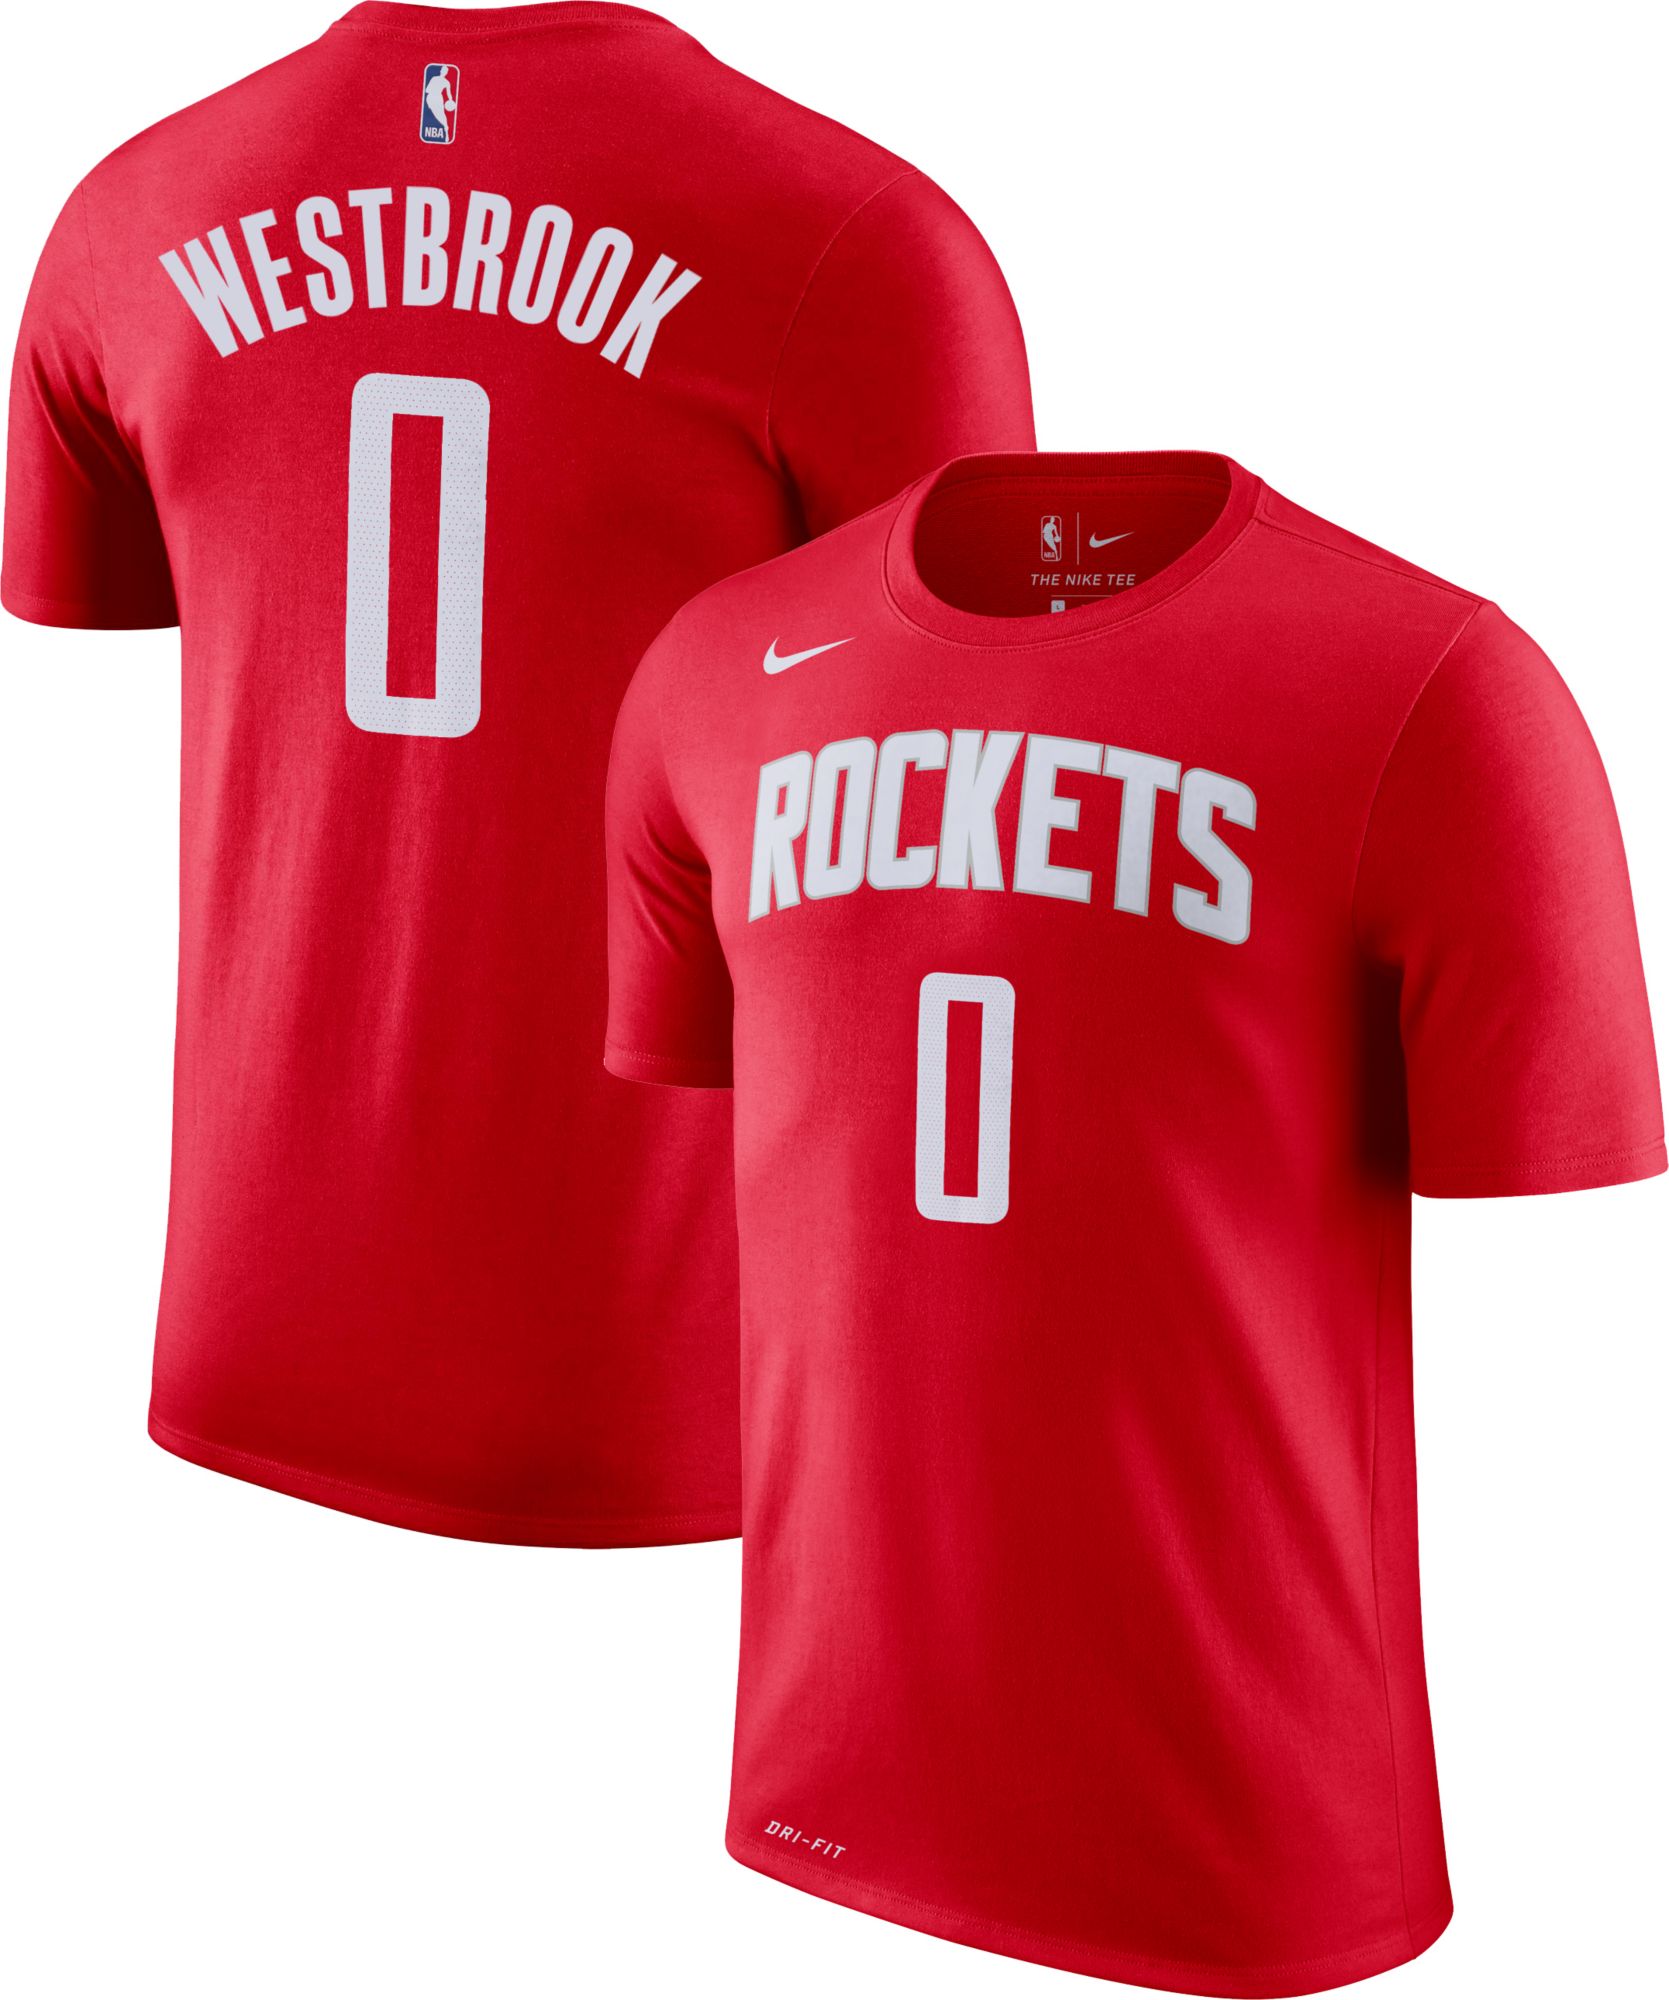 russell westbrook houston rockets shirt